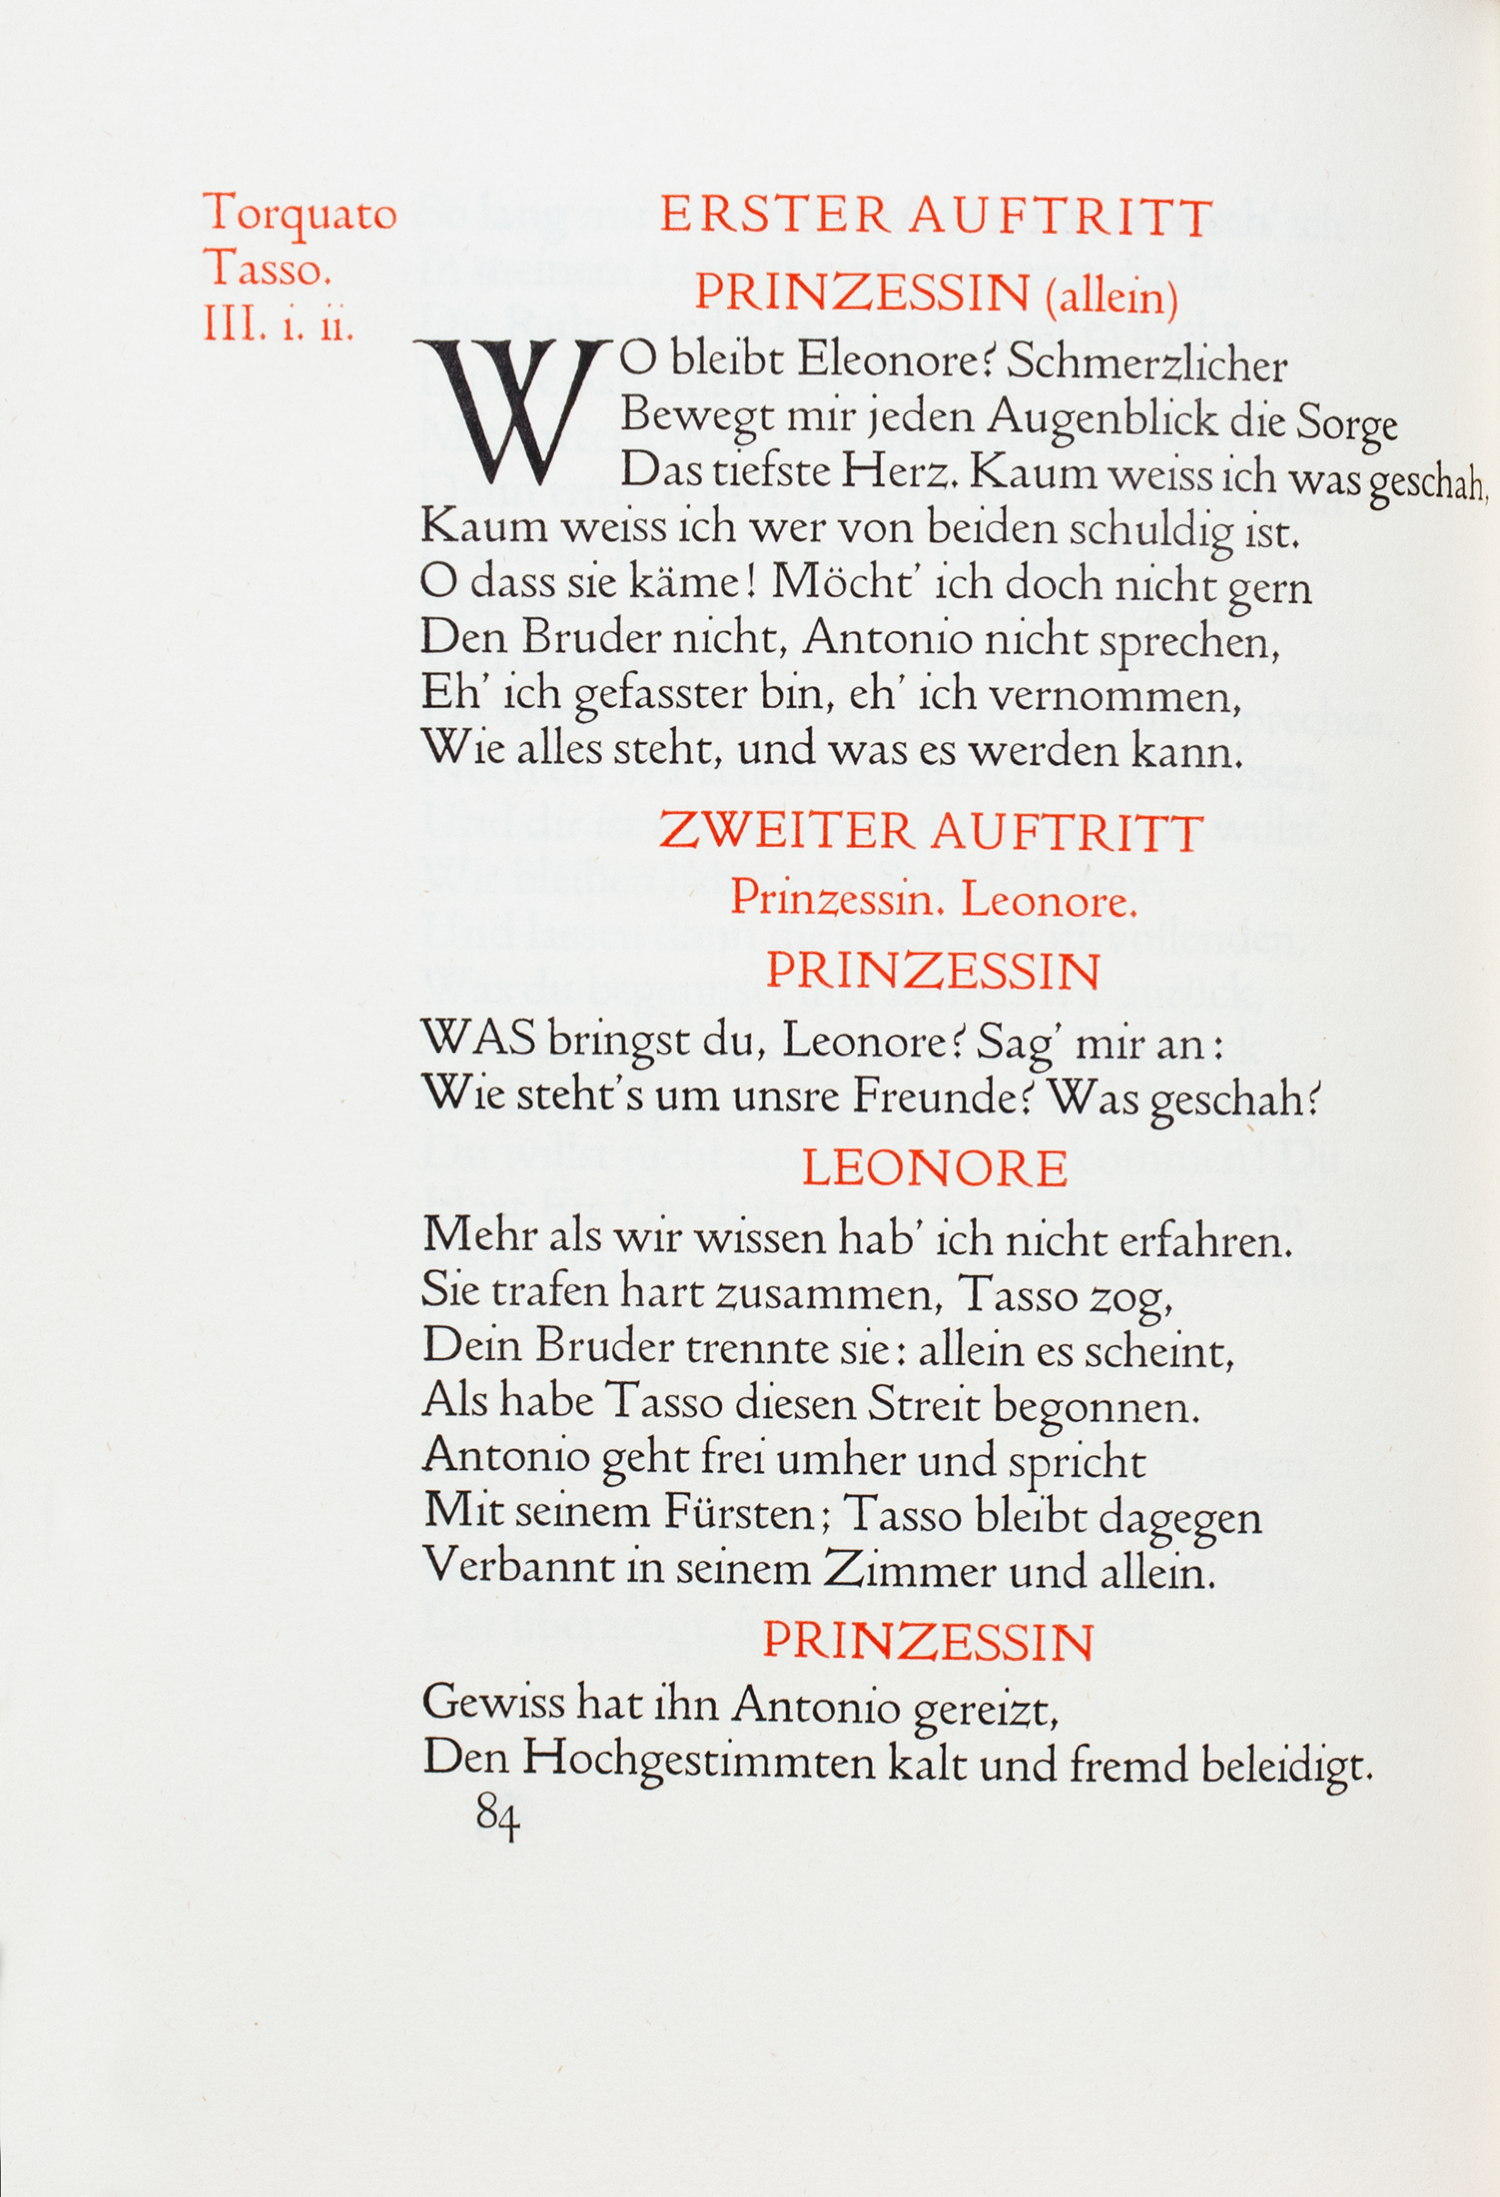 Doves Press - [Johann Wolfgang von] Goethe. Torquato Tasso. - Image 2 of 2